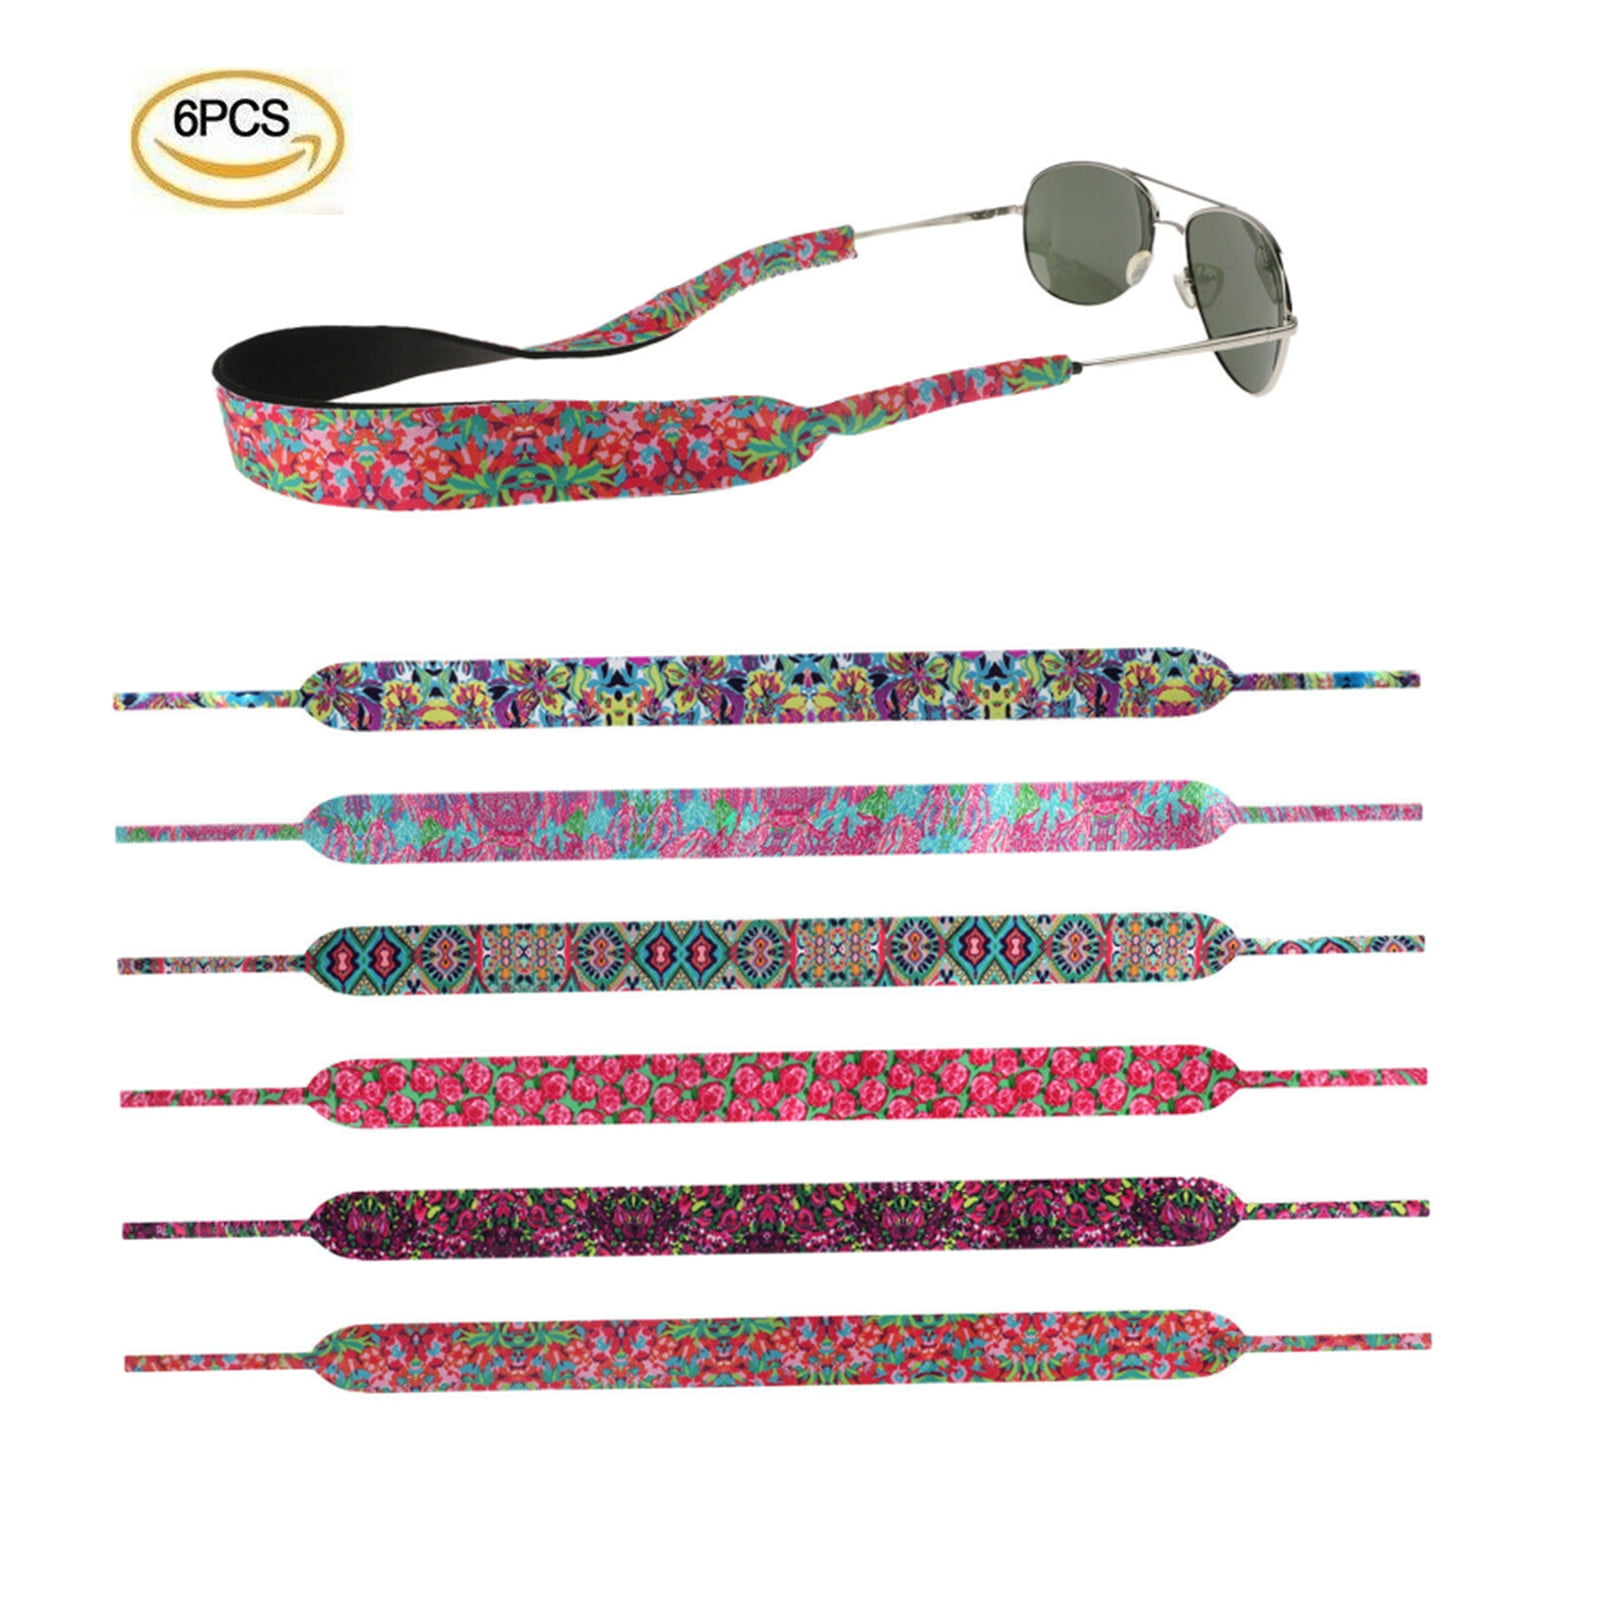 6 Pack Neoprene Glasses Straps Floating Sunglasses Eyeglass Strap Anti Slip  Sports Safety Eyewear Retainer Holder for Adults Water Sports Fishing